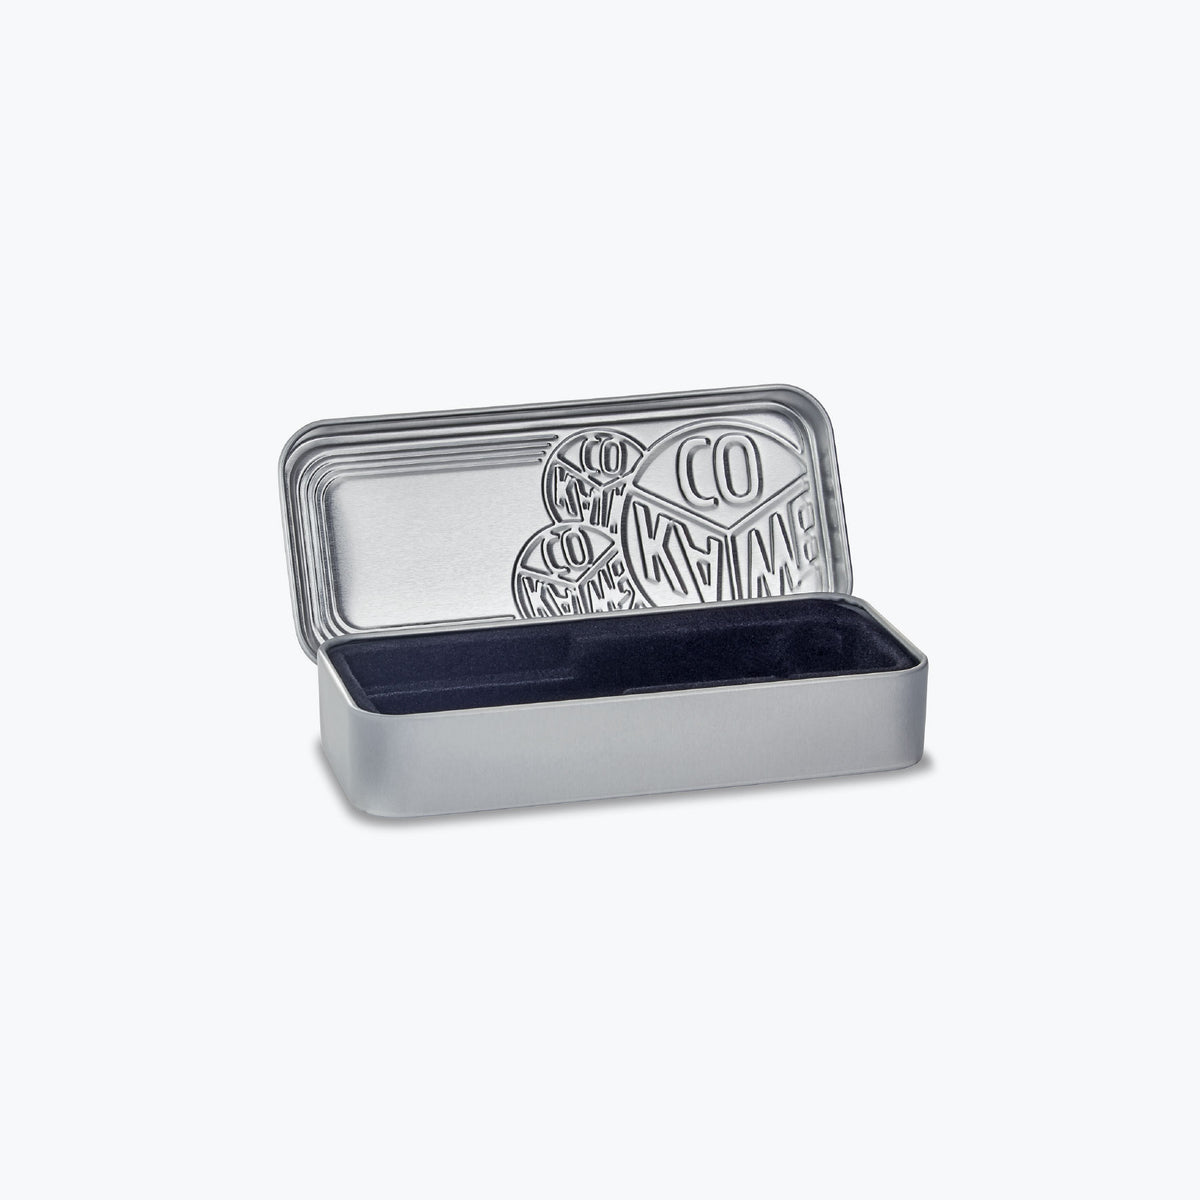 Kaweco - Storage Box - Short - Silver